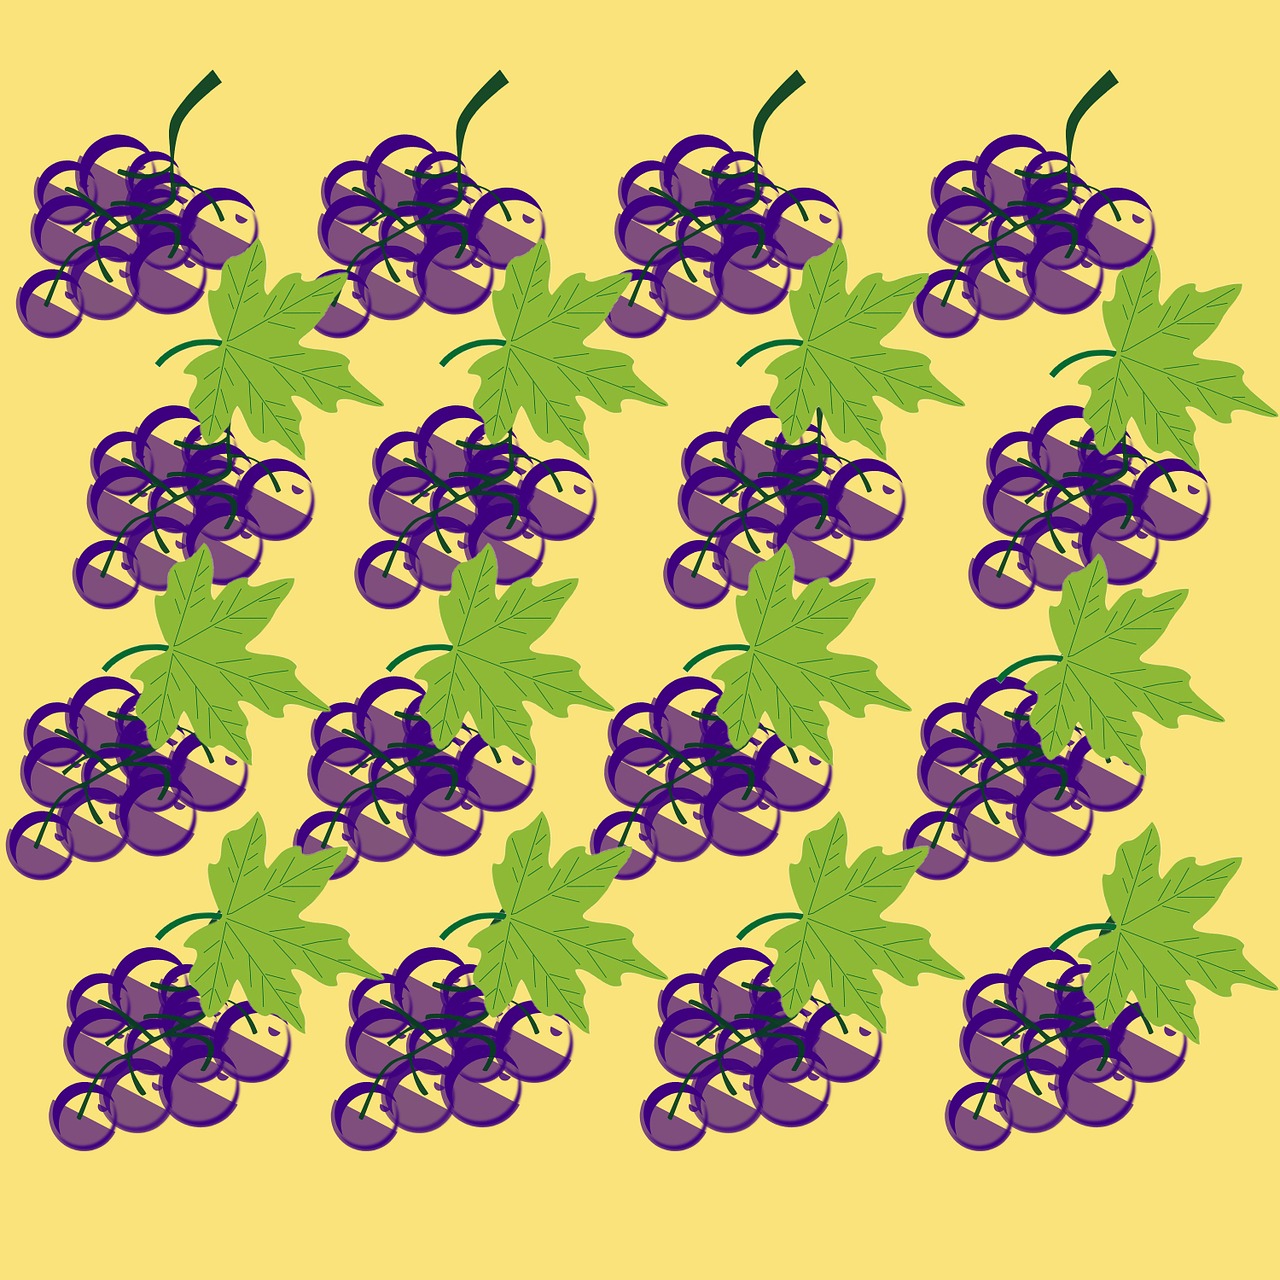 grapes background sheet free photo